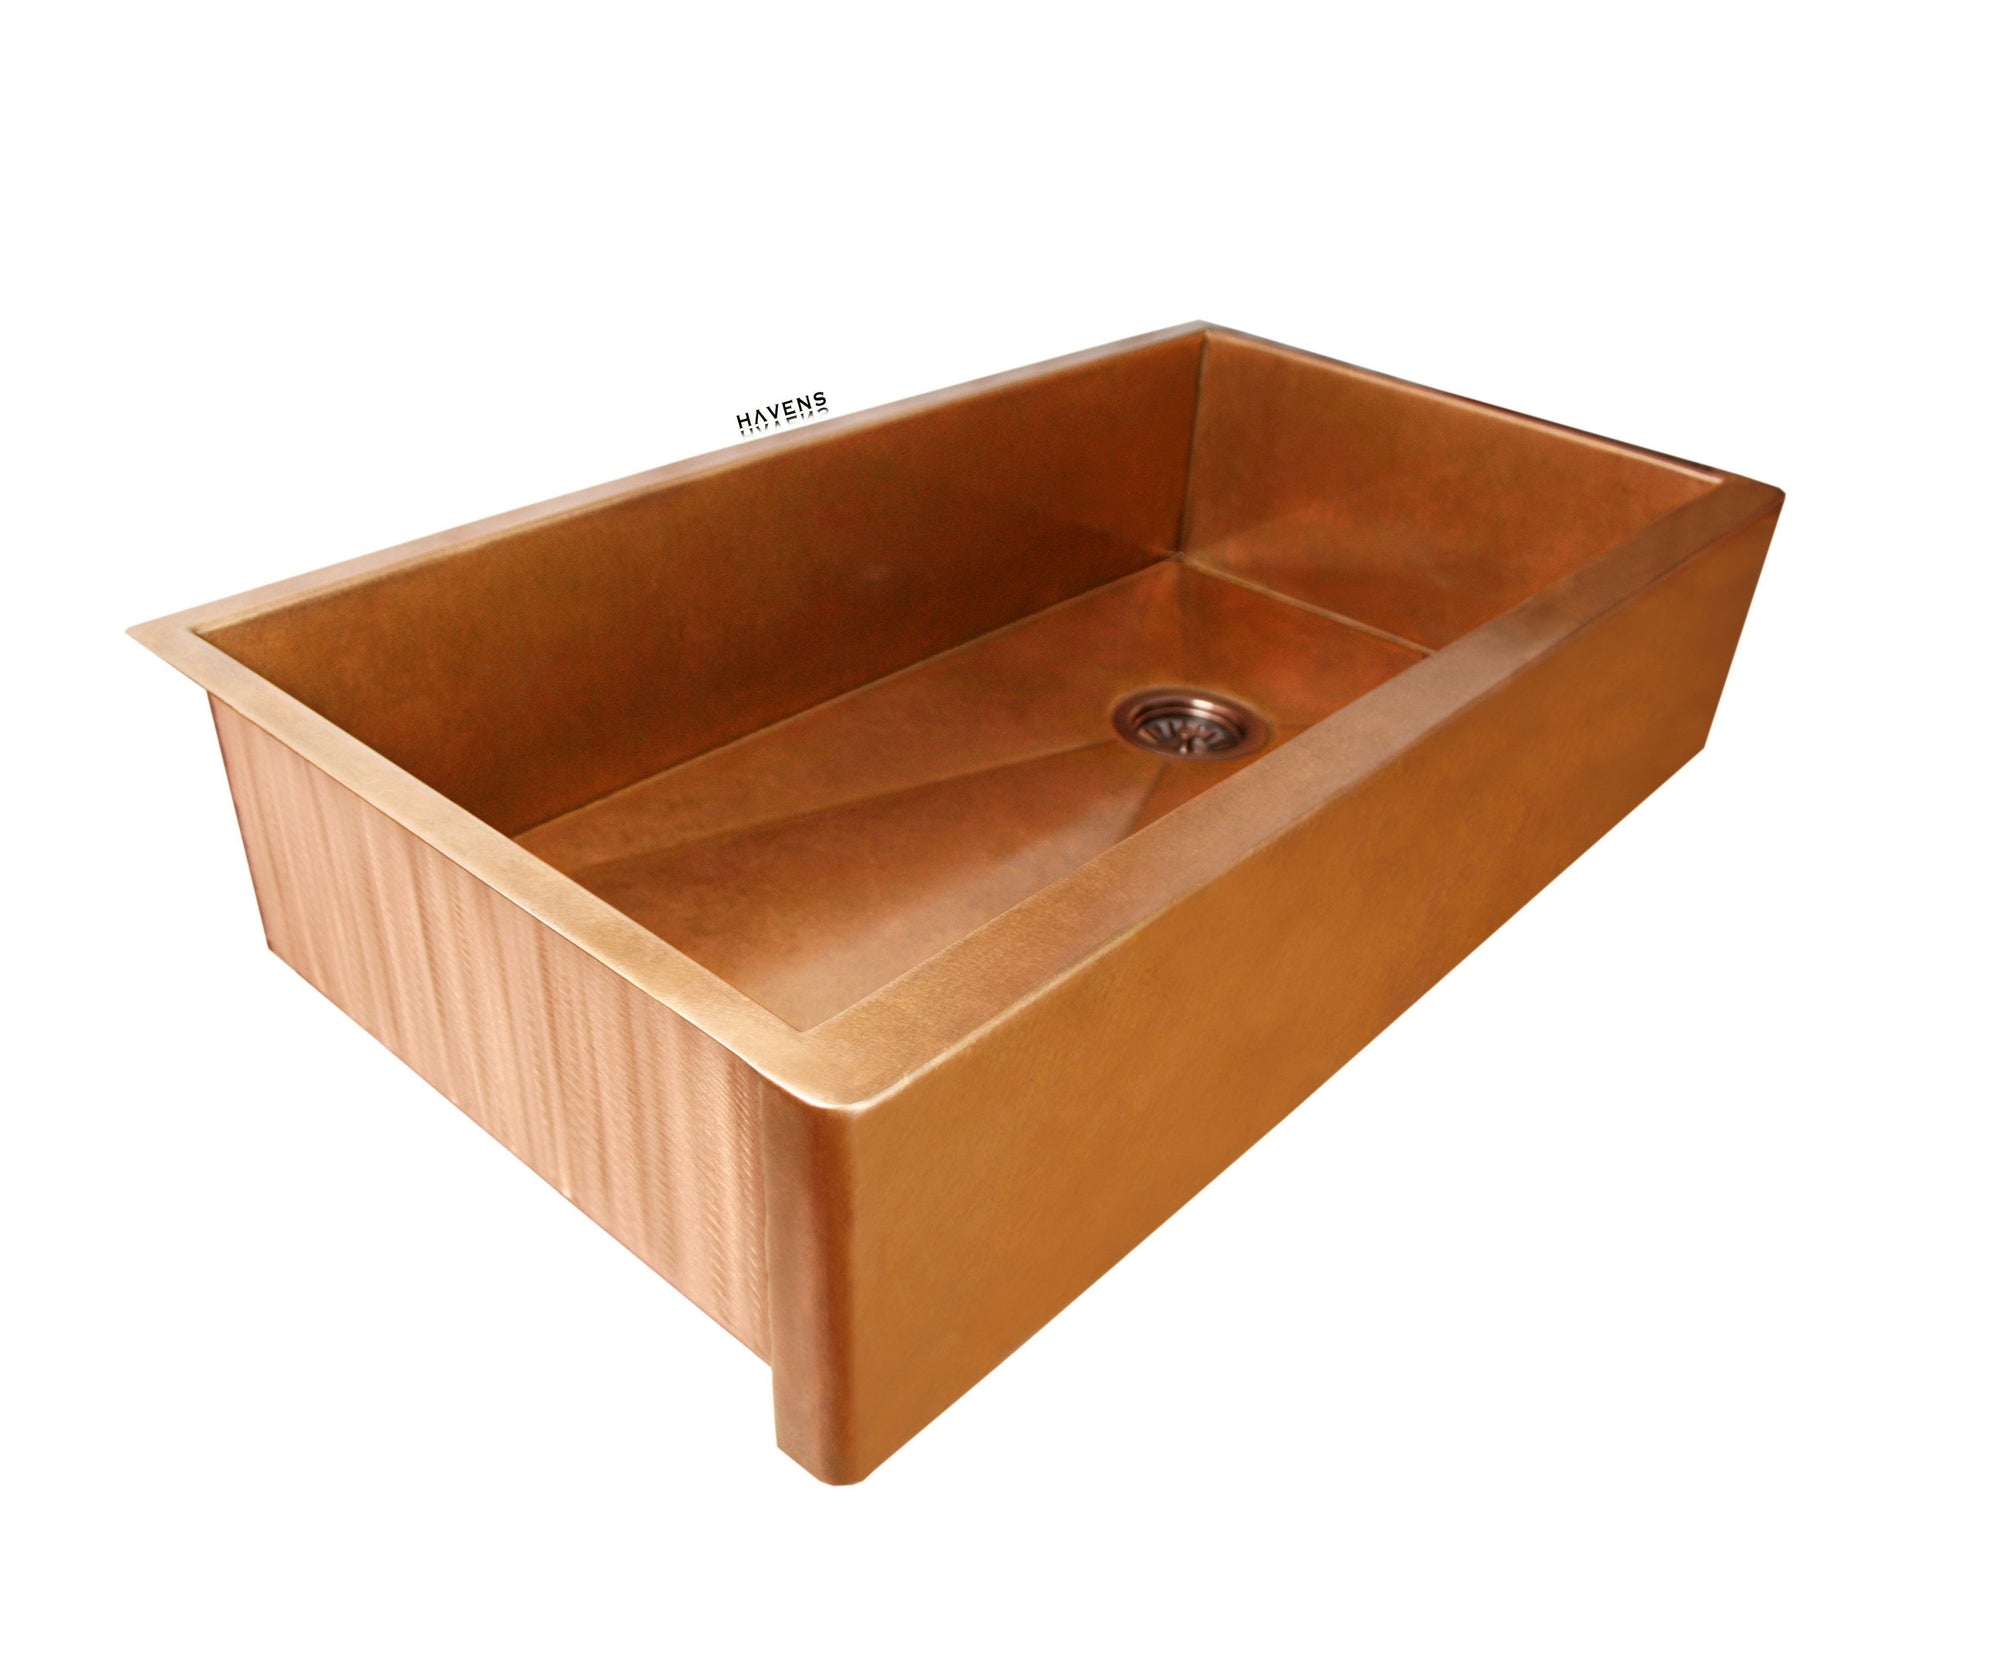 Single bowl 33 inch farmhouse copper kitchen sink installs as an undermount.